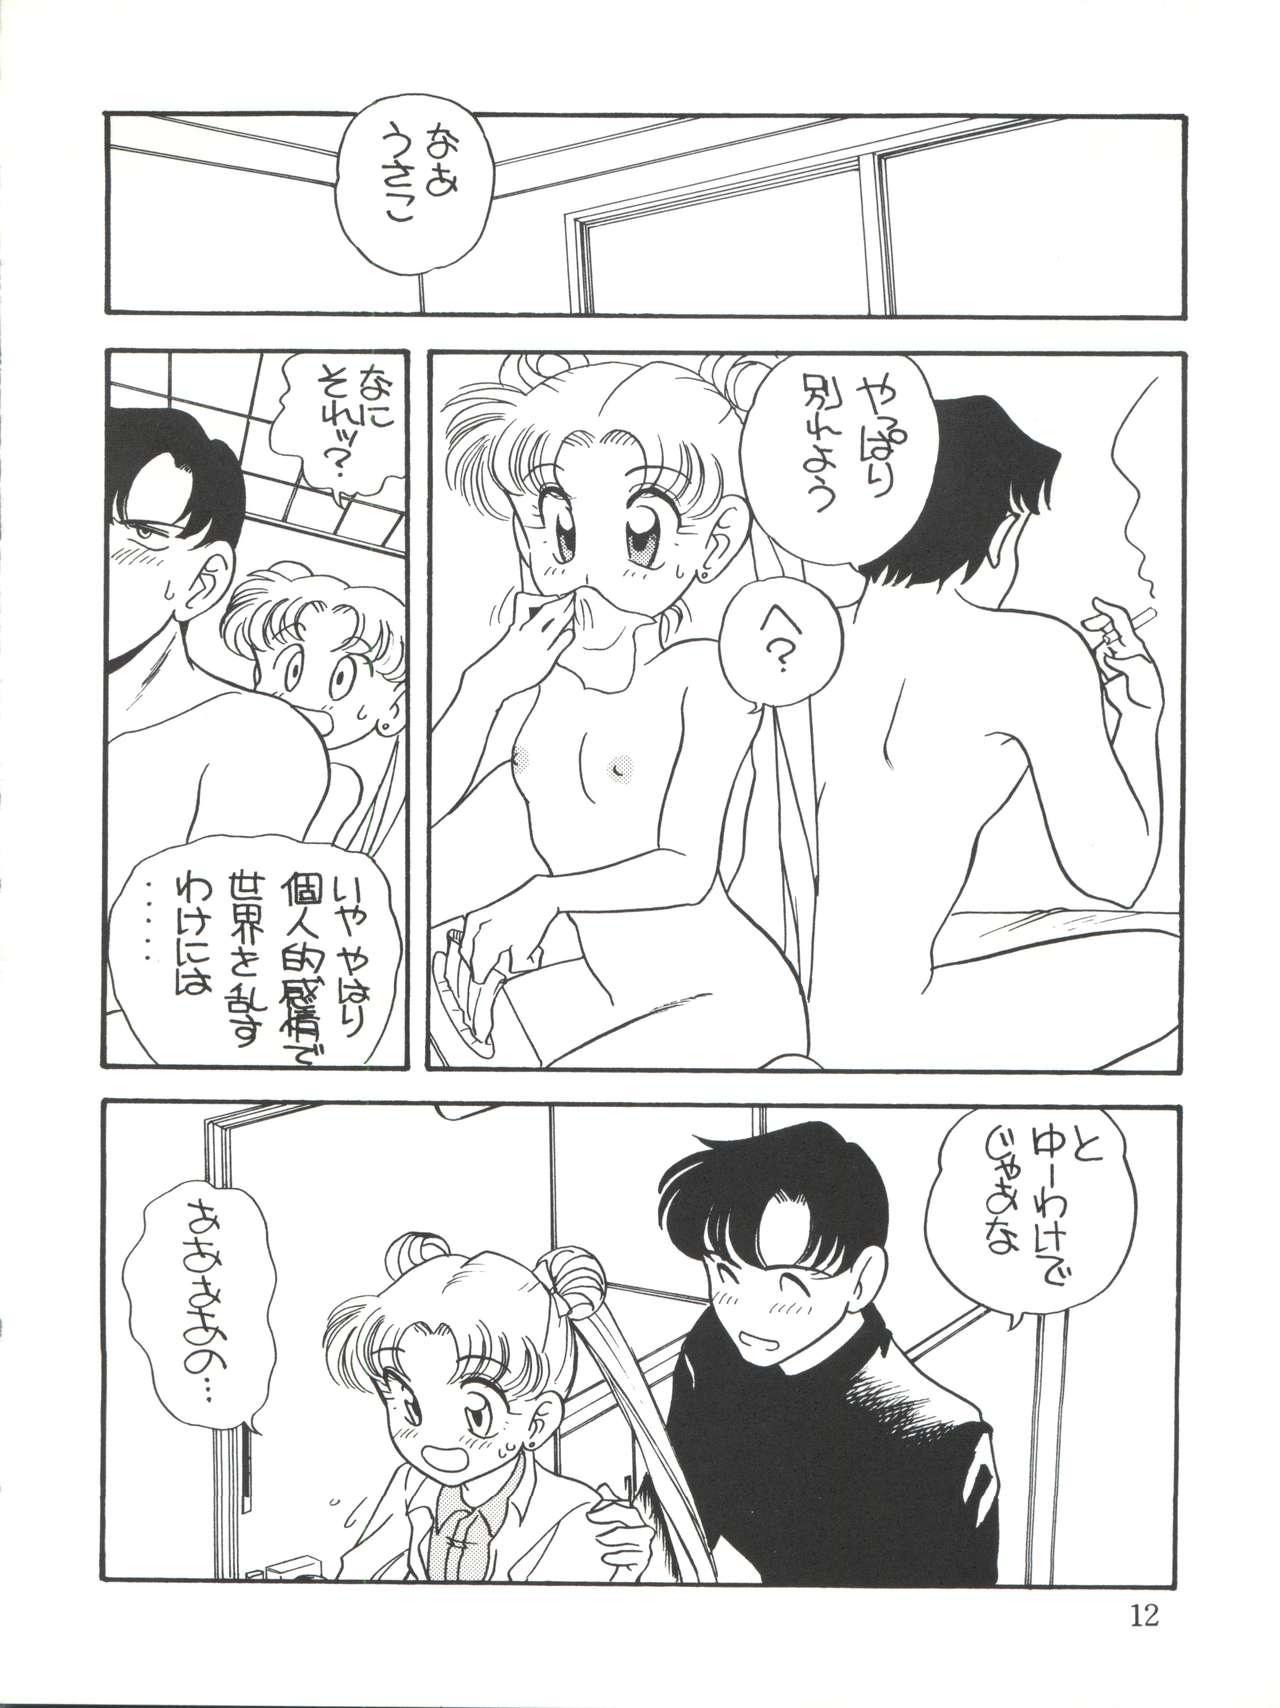 Bdsm Elfin 9 - Sailor moon Kiss - Page 12